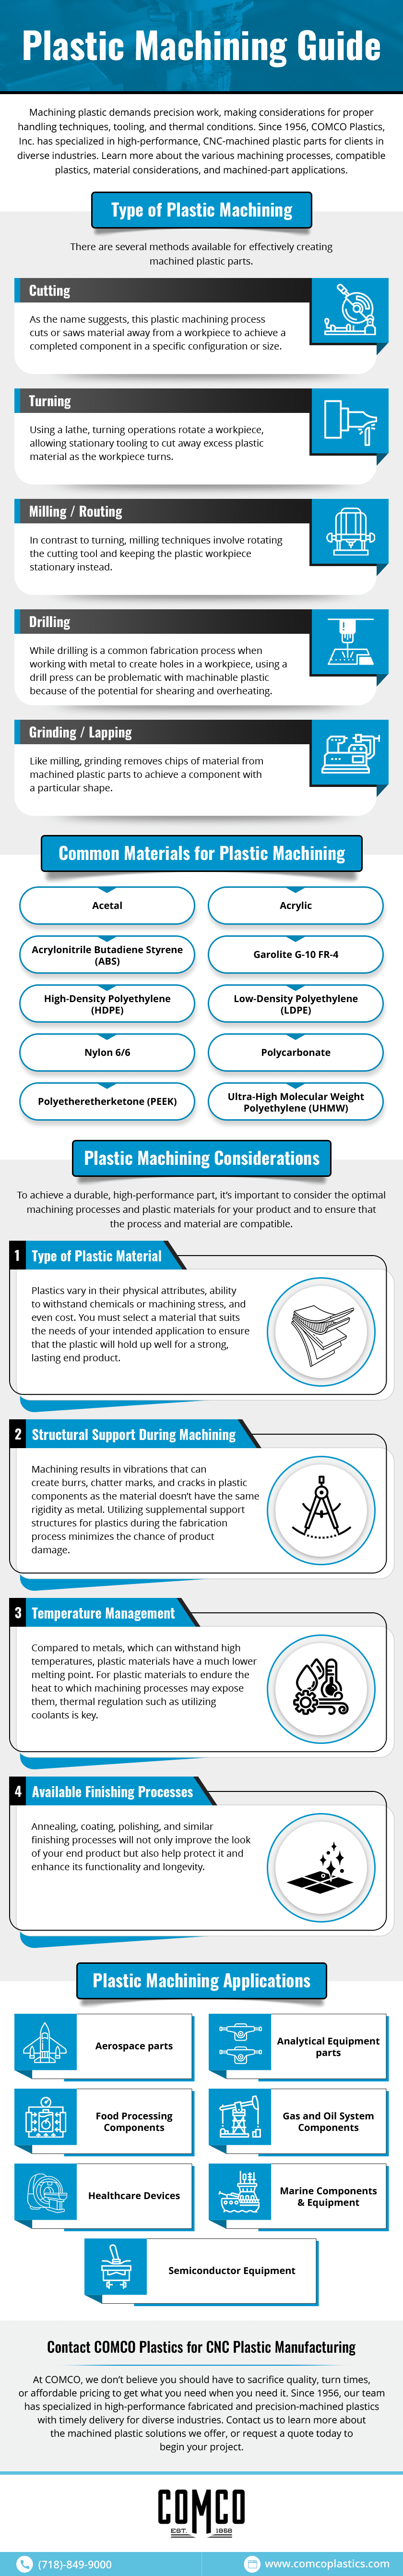 Plastic Machining Guide